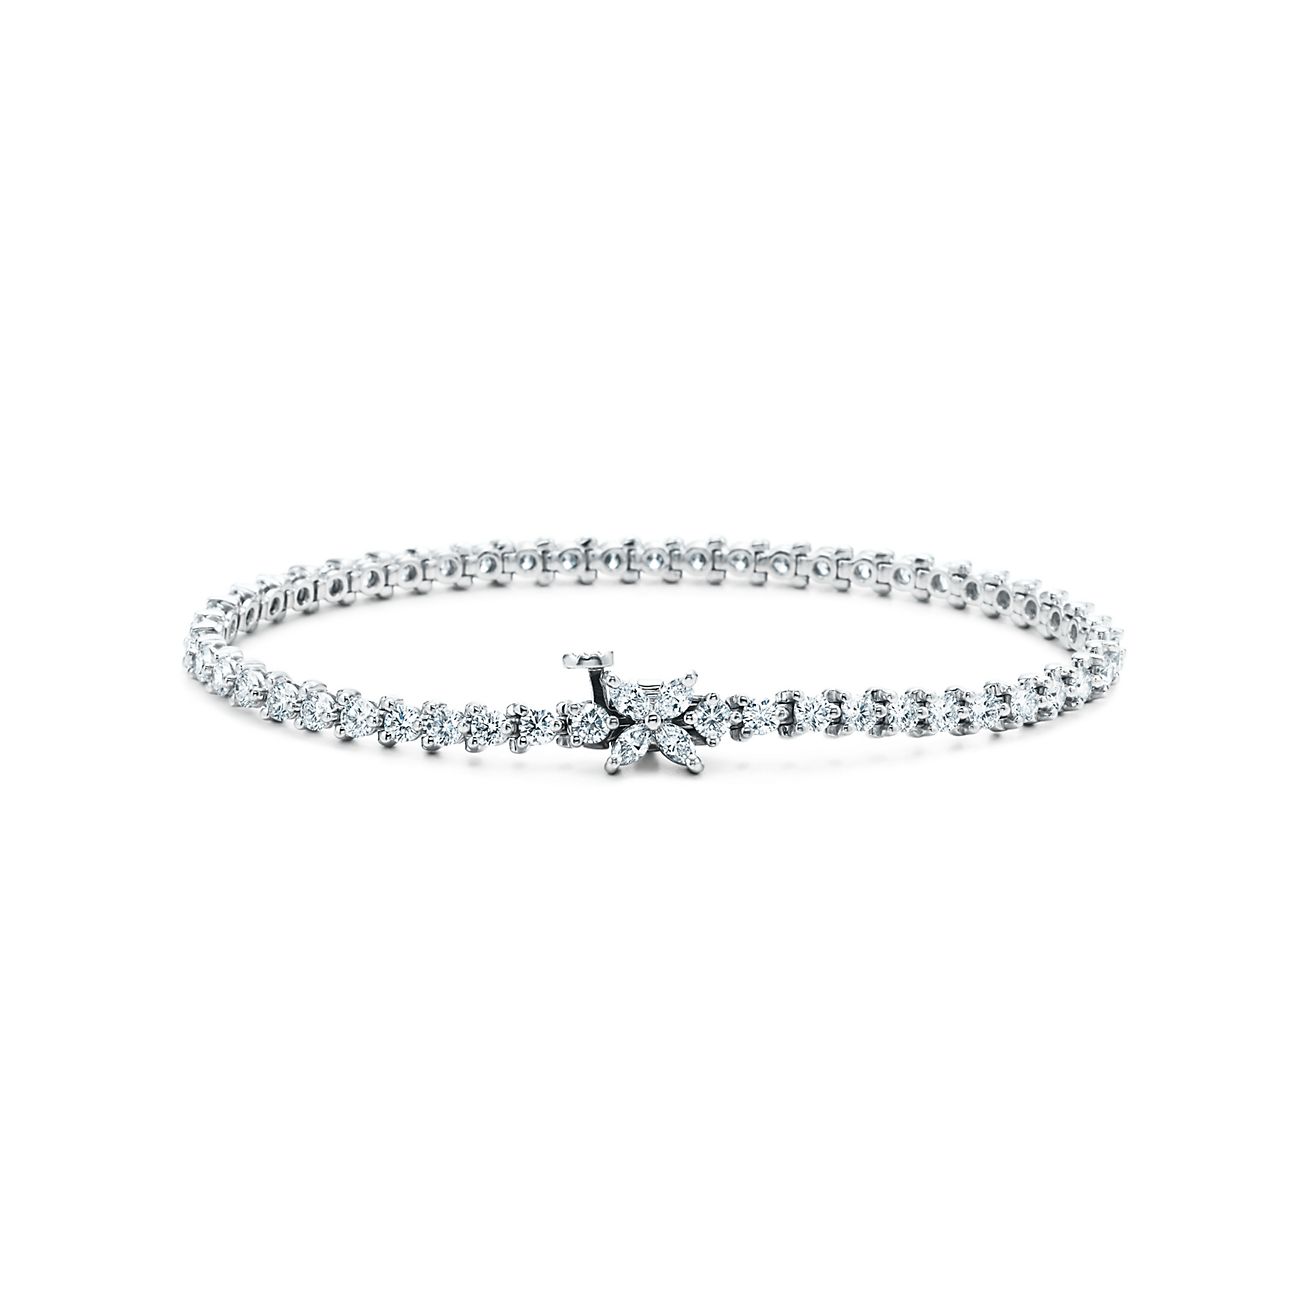 Discover 83+ tiffany diamond bracelet uk